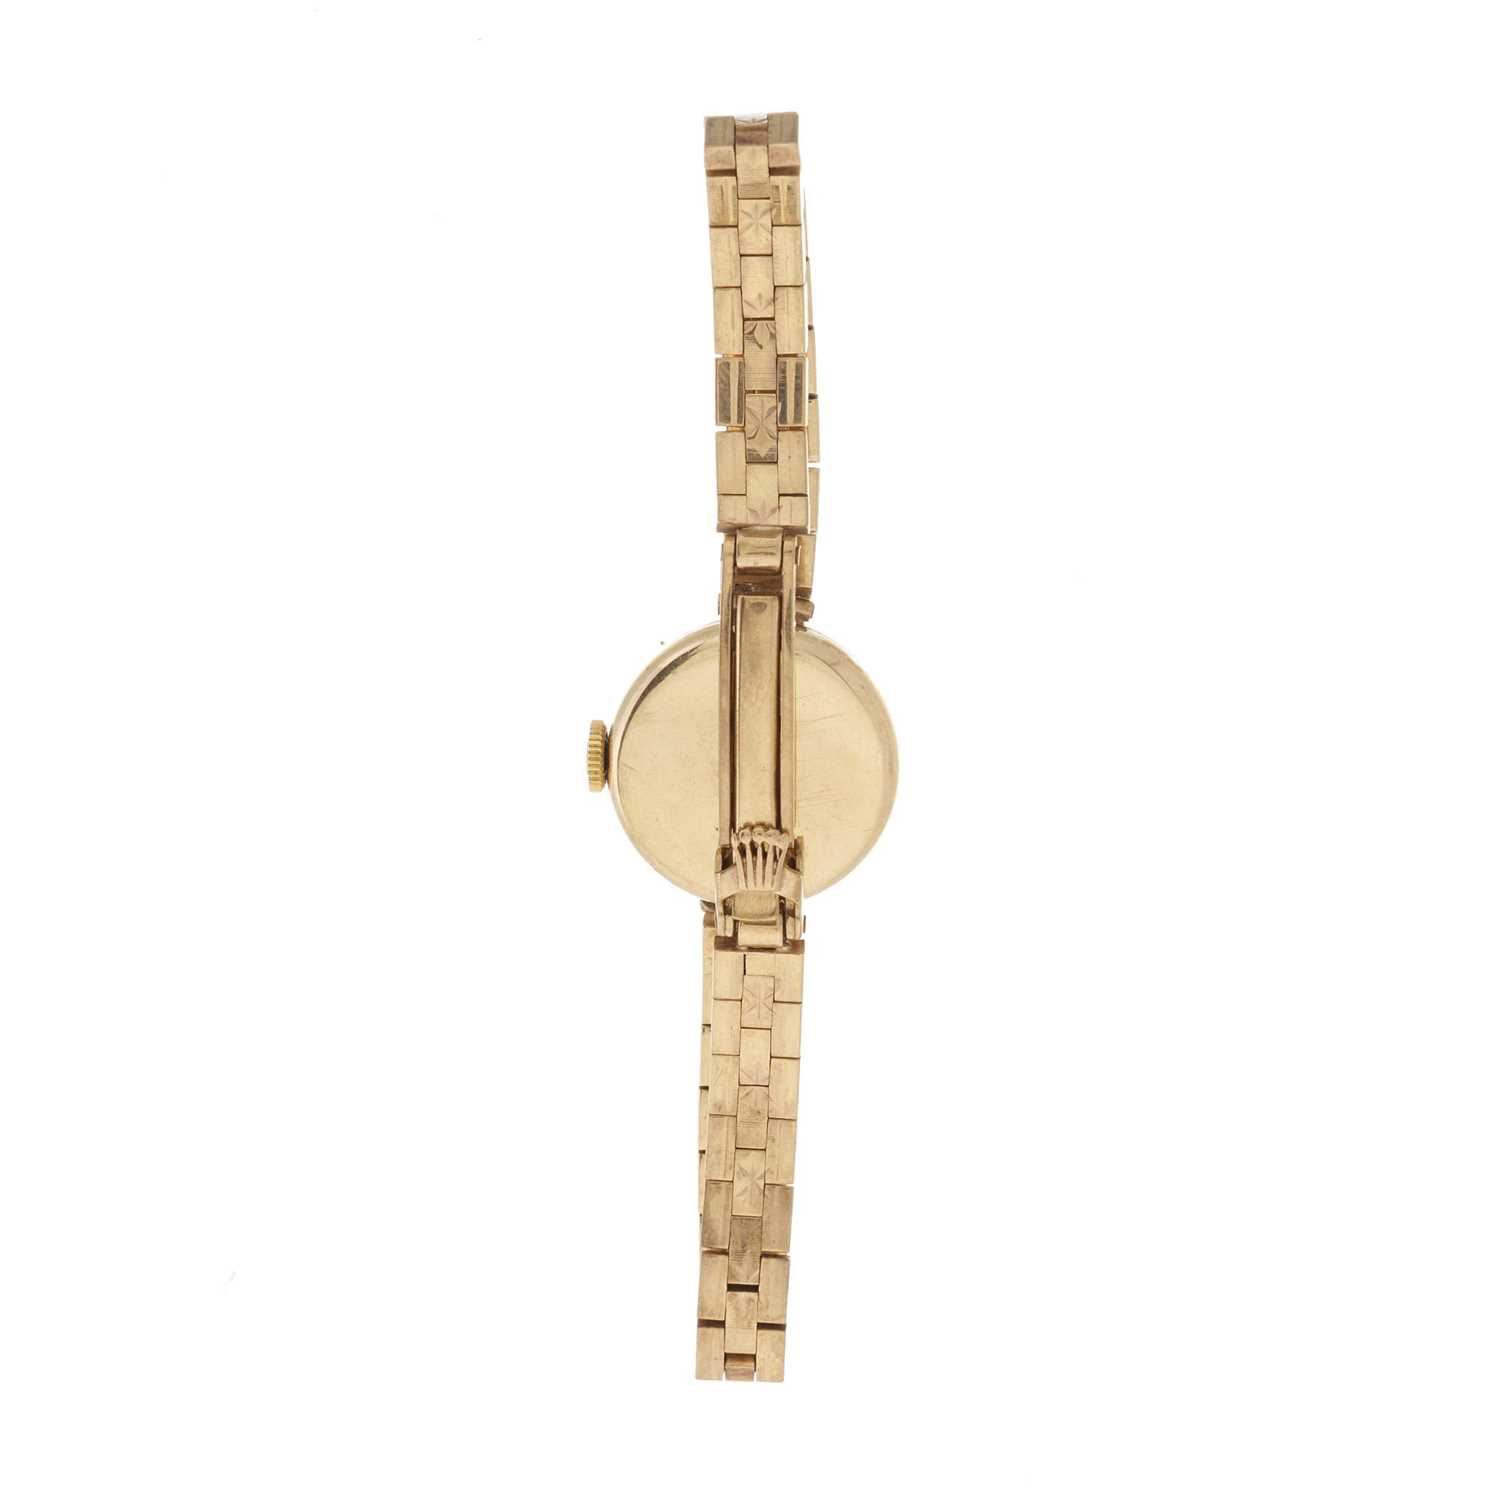 Tudor, a 9ct gold Royal bracelet watch - Image 2 of 3